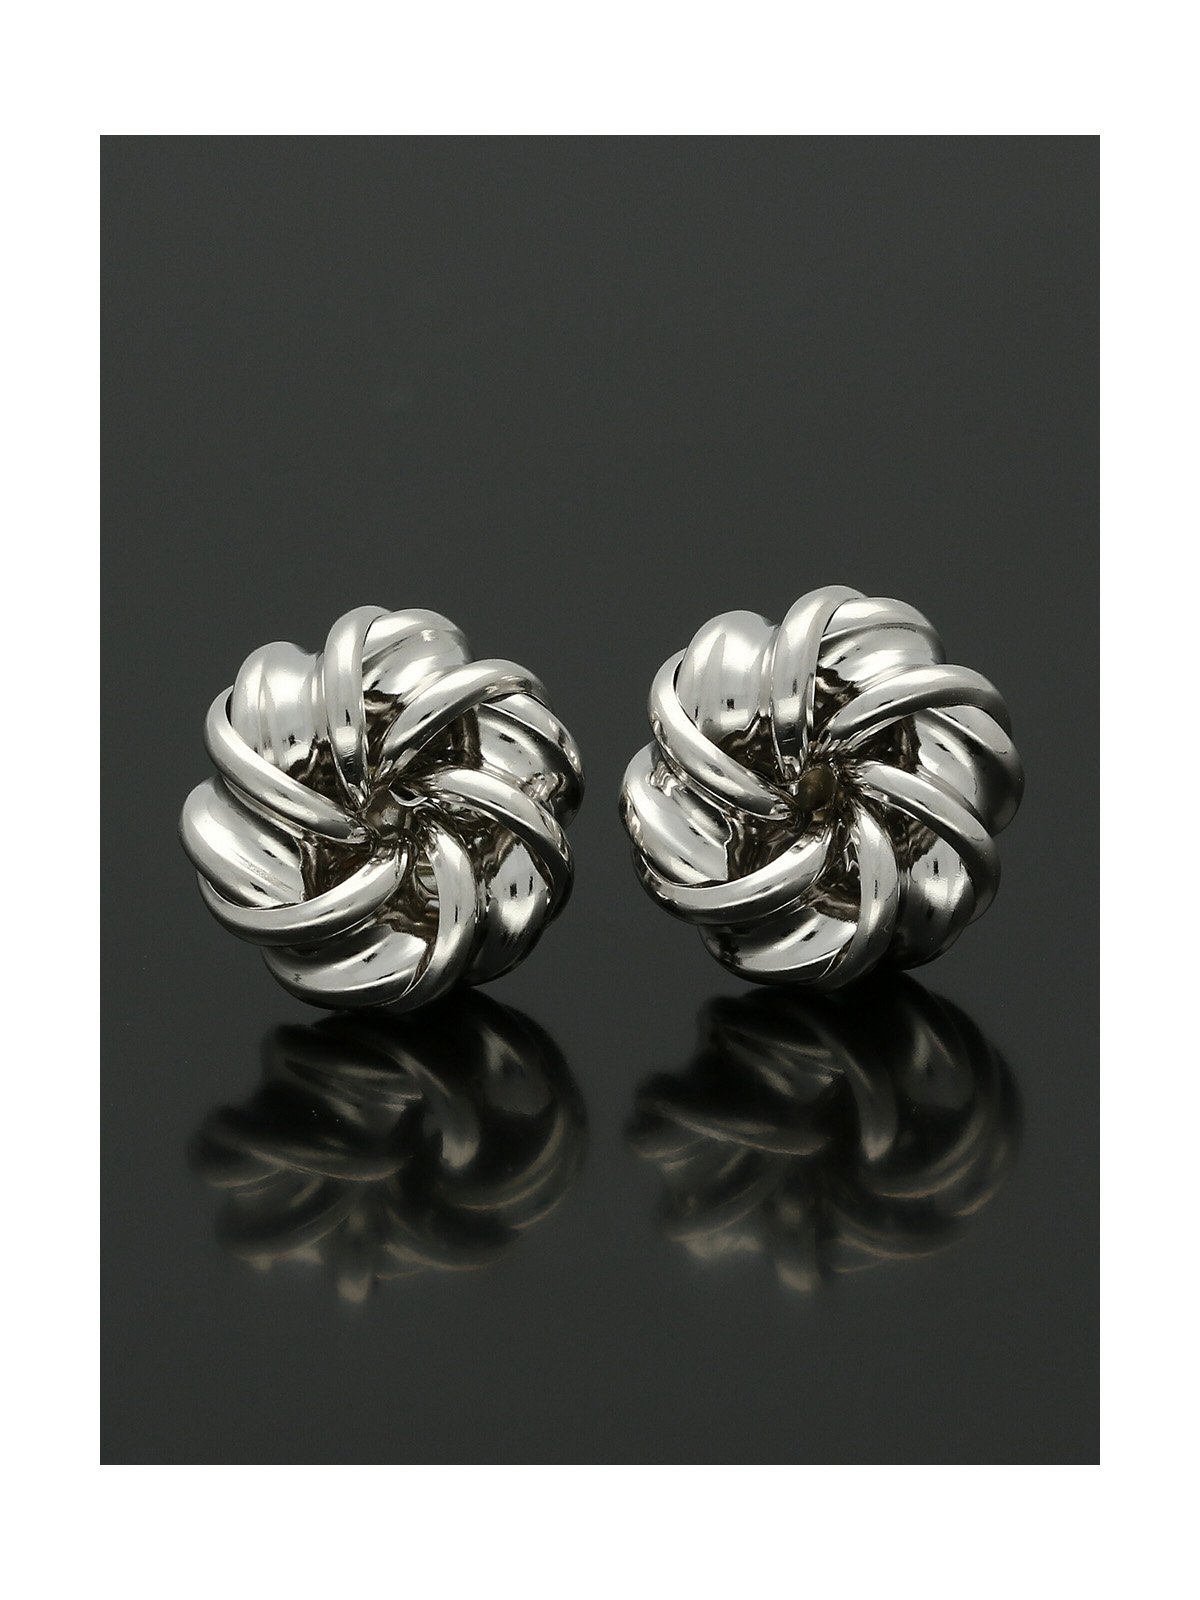 Swirl Knot Stud Earrings 11mm in 9ct White Gold